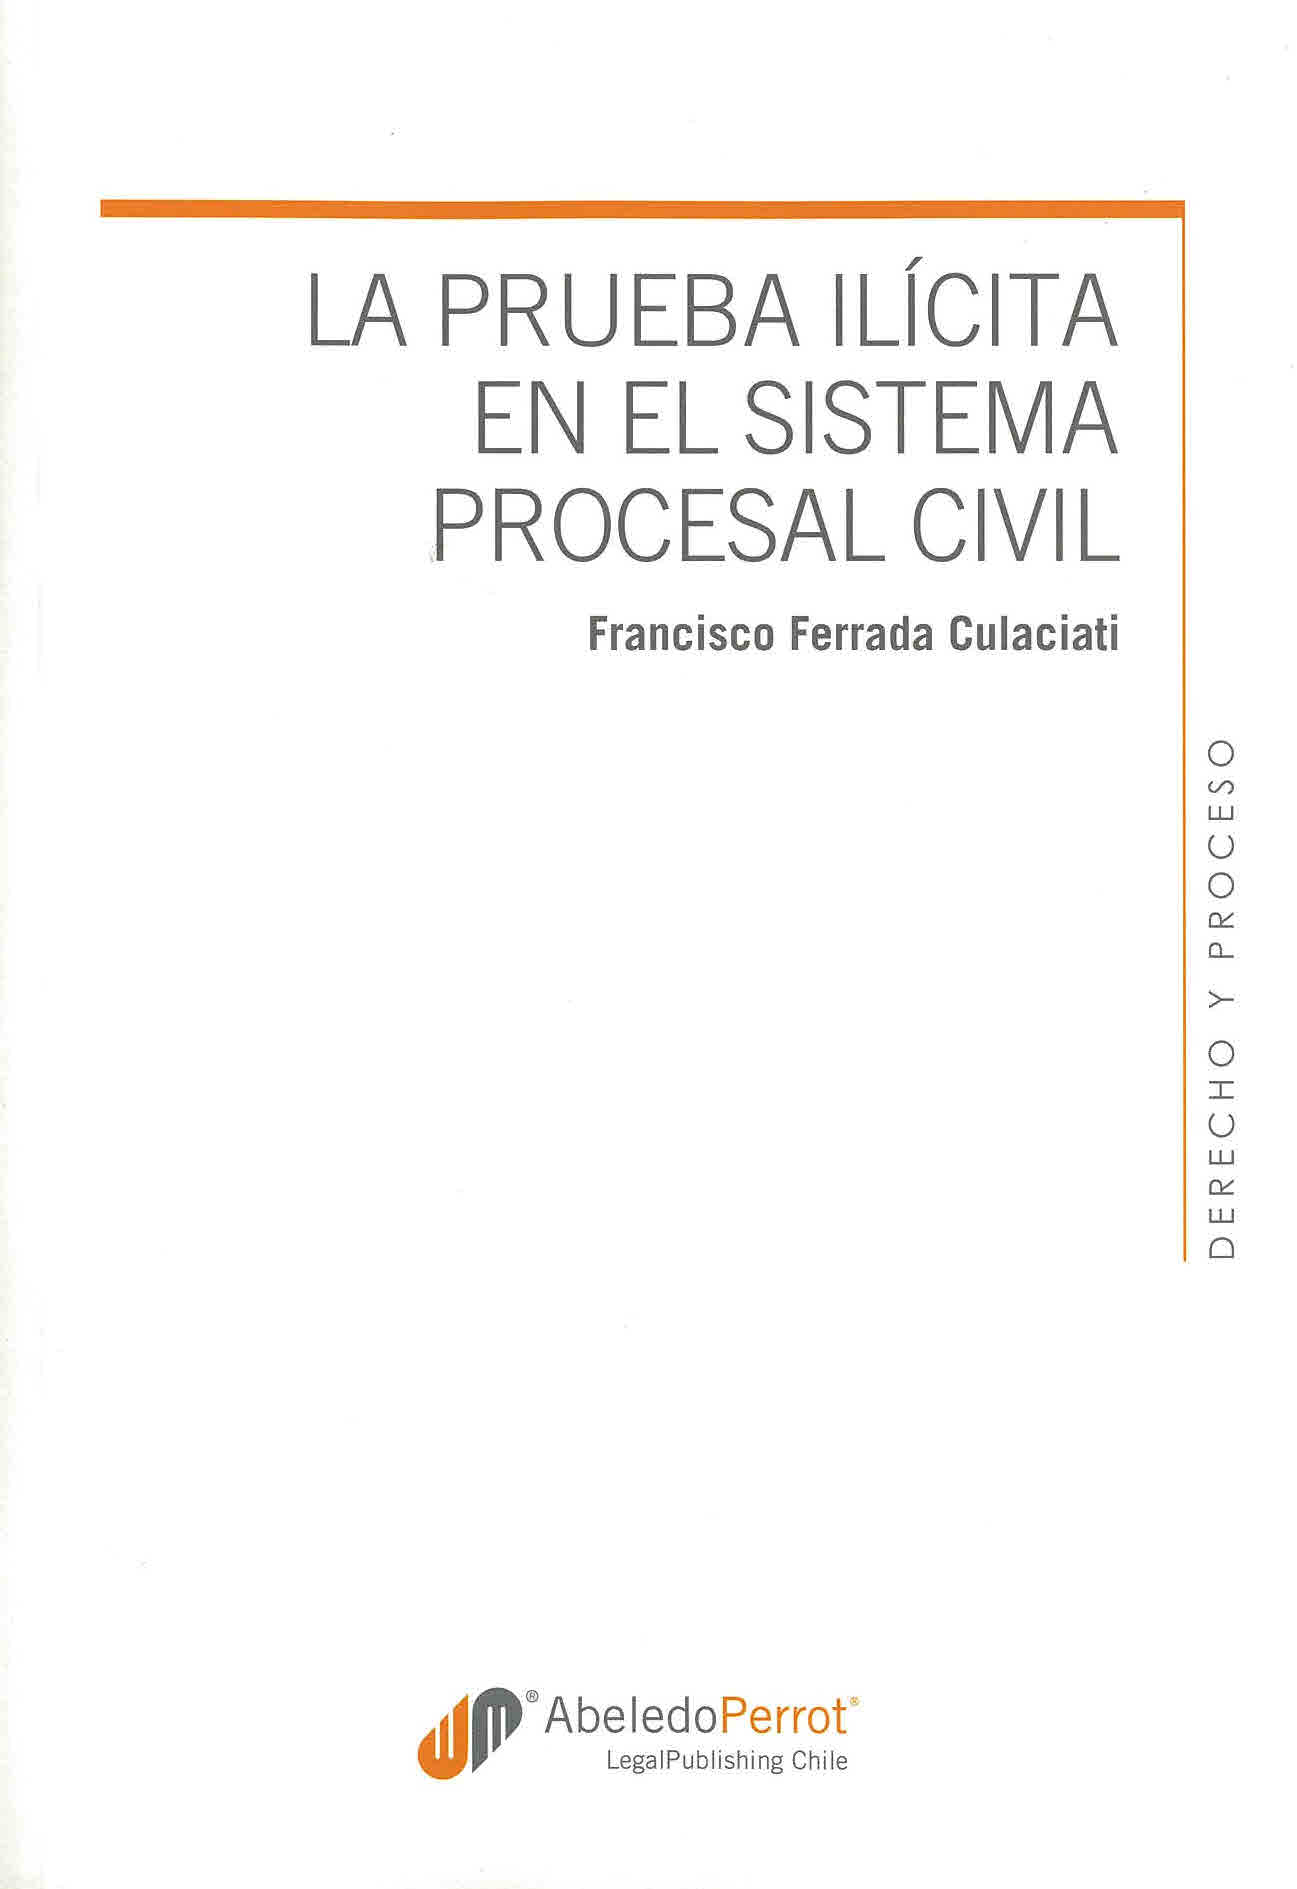 La prueba ilícita en el sistema procesal civil